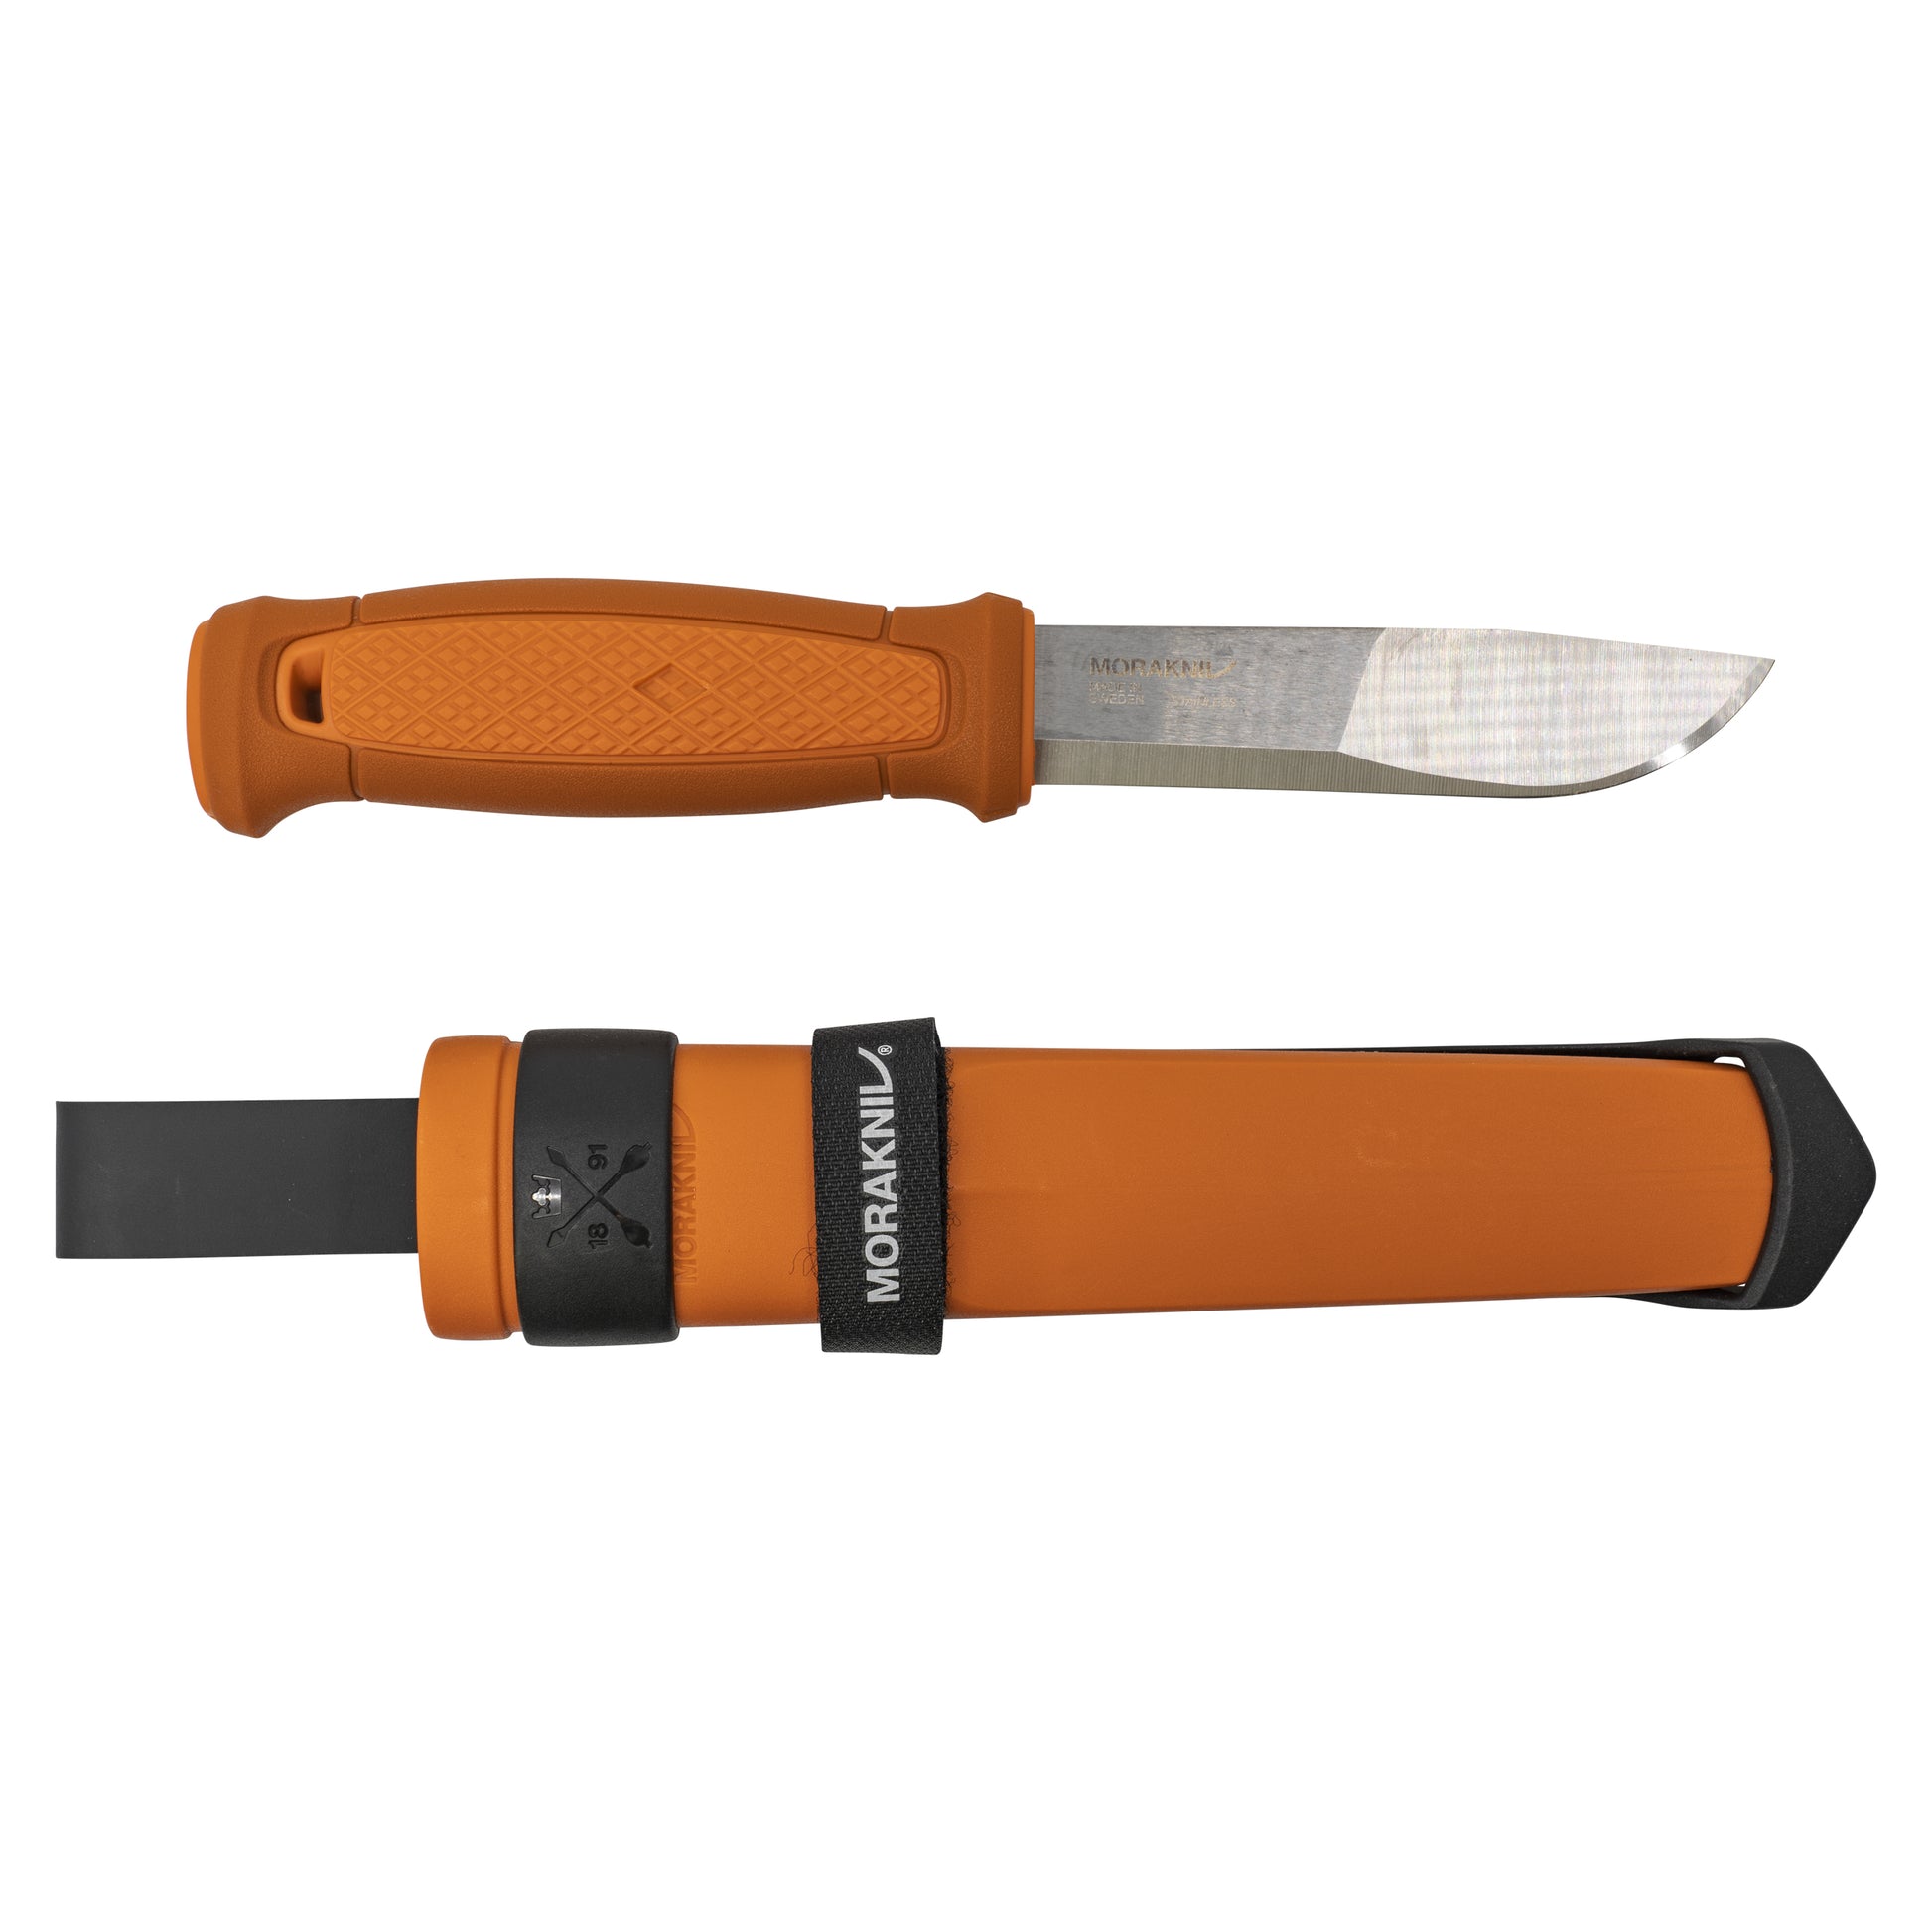 Mora All Around Outdoor Hunting Survival Knife Bushcraft Puukko Knife